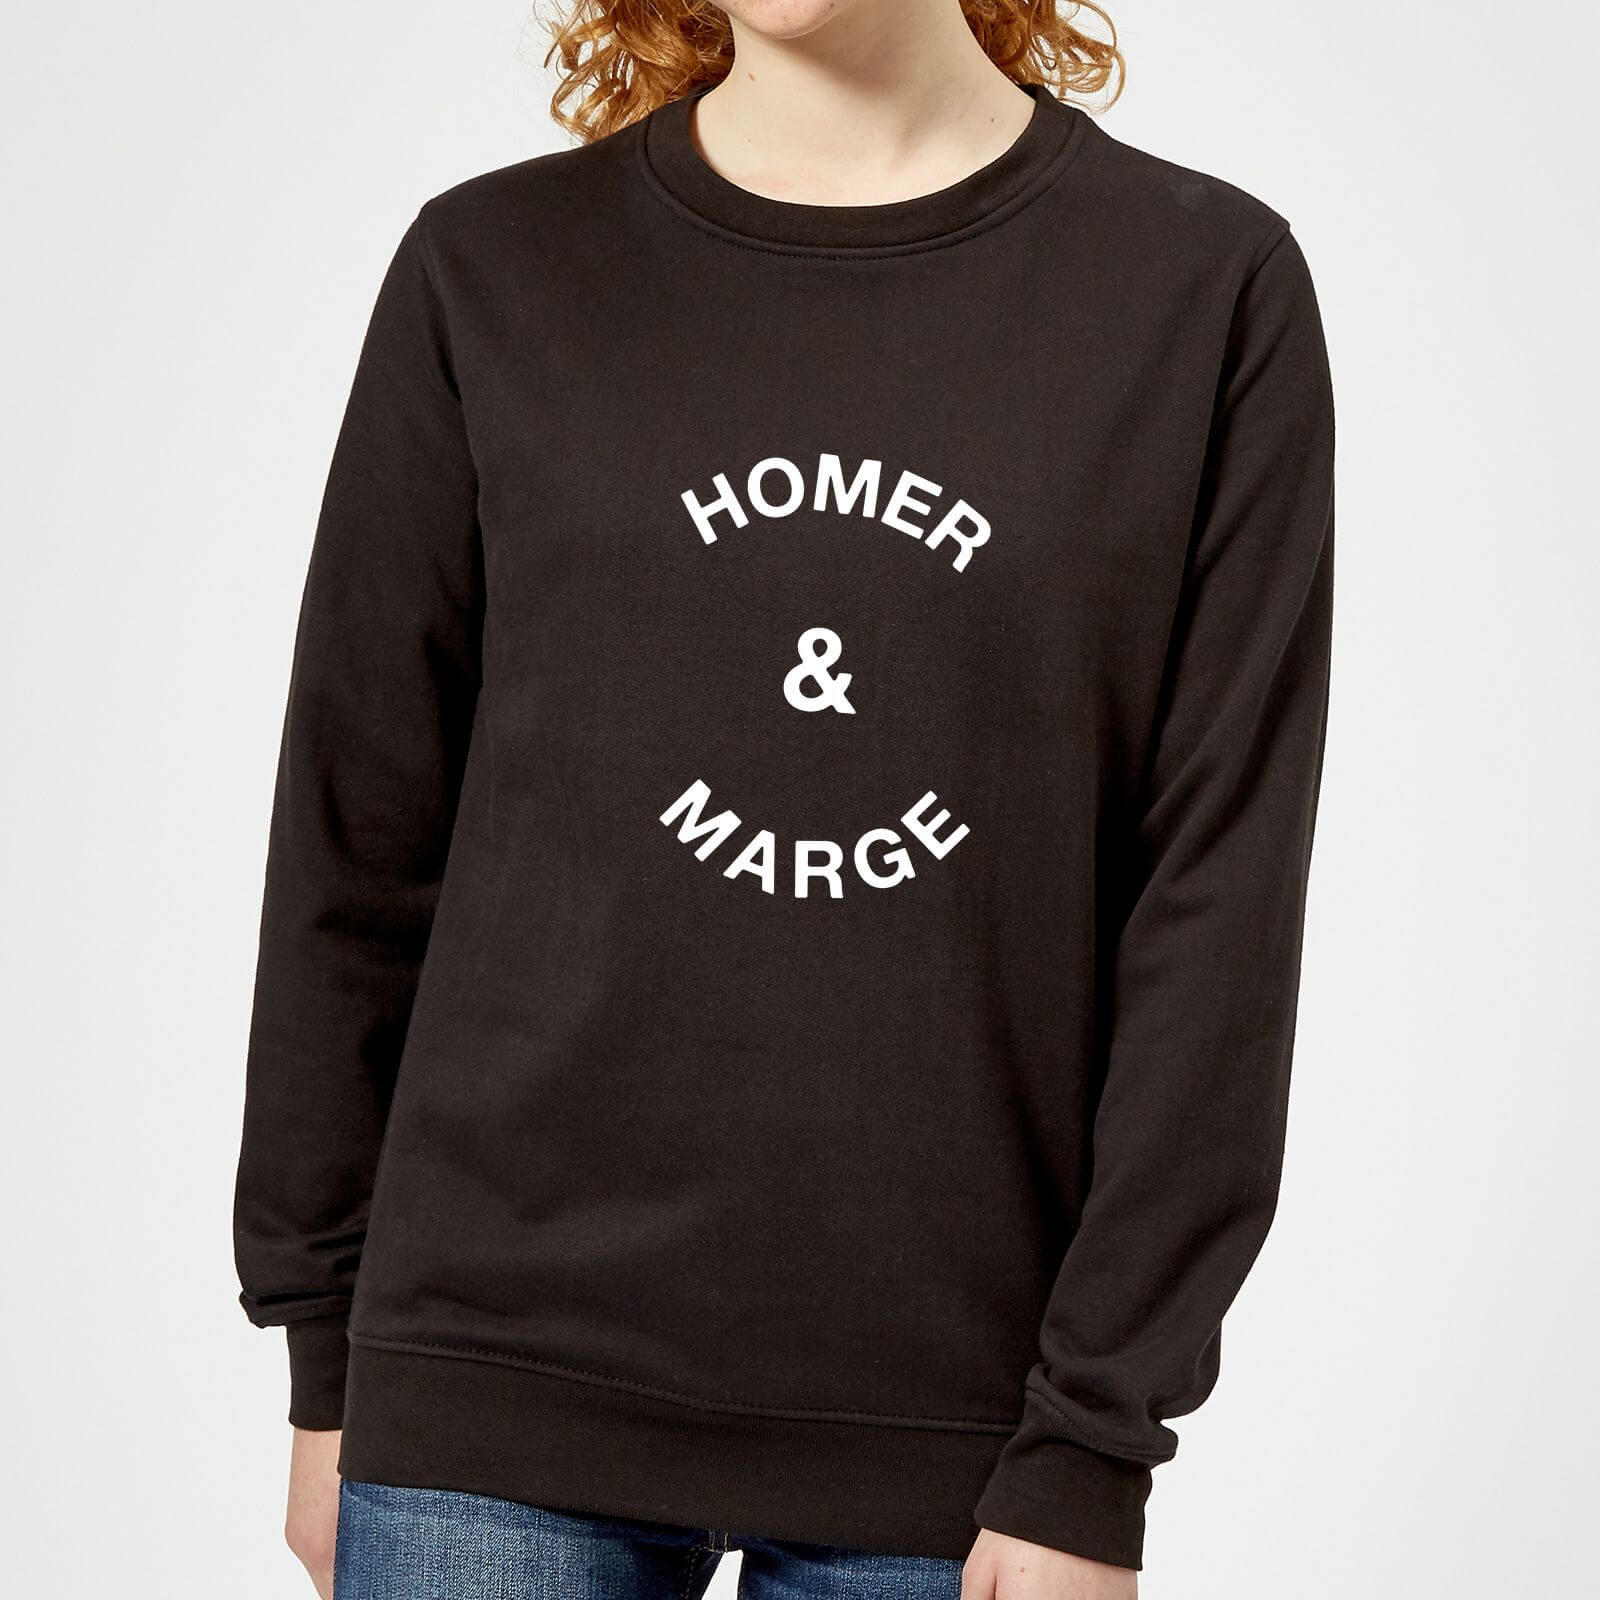 Homer & Marge Women's Sweatshirt - Black - M - Black